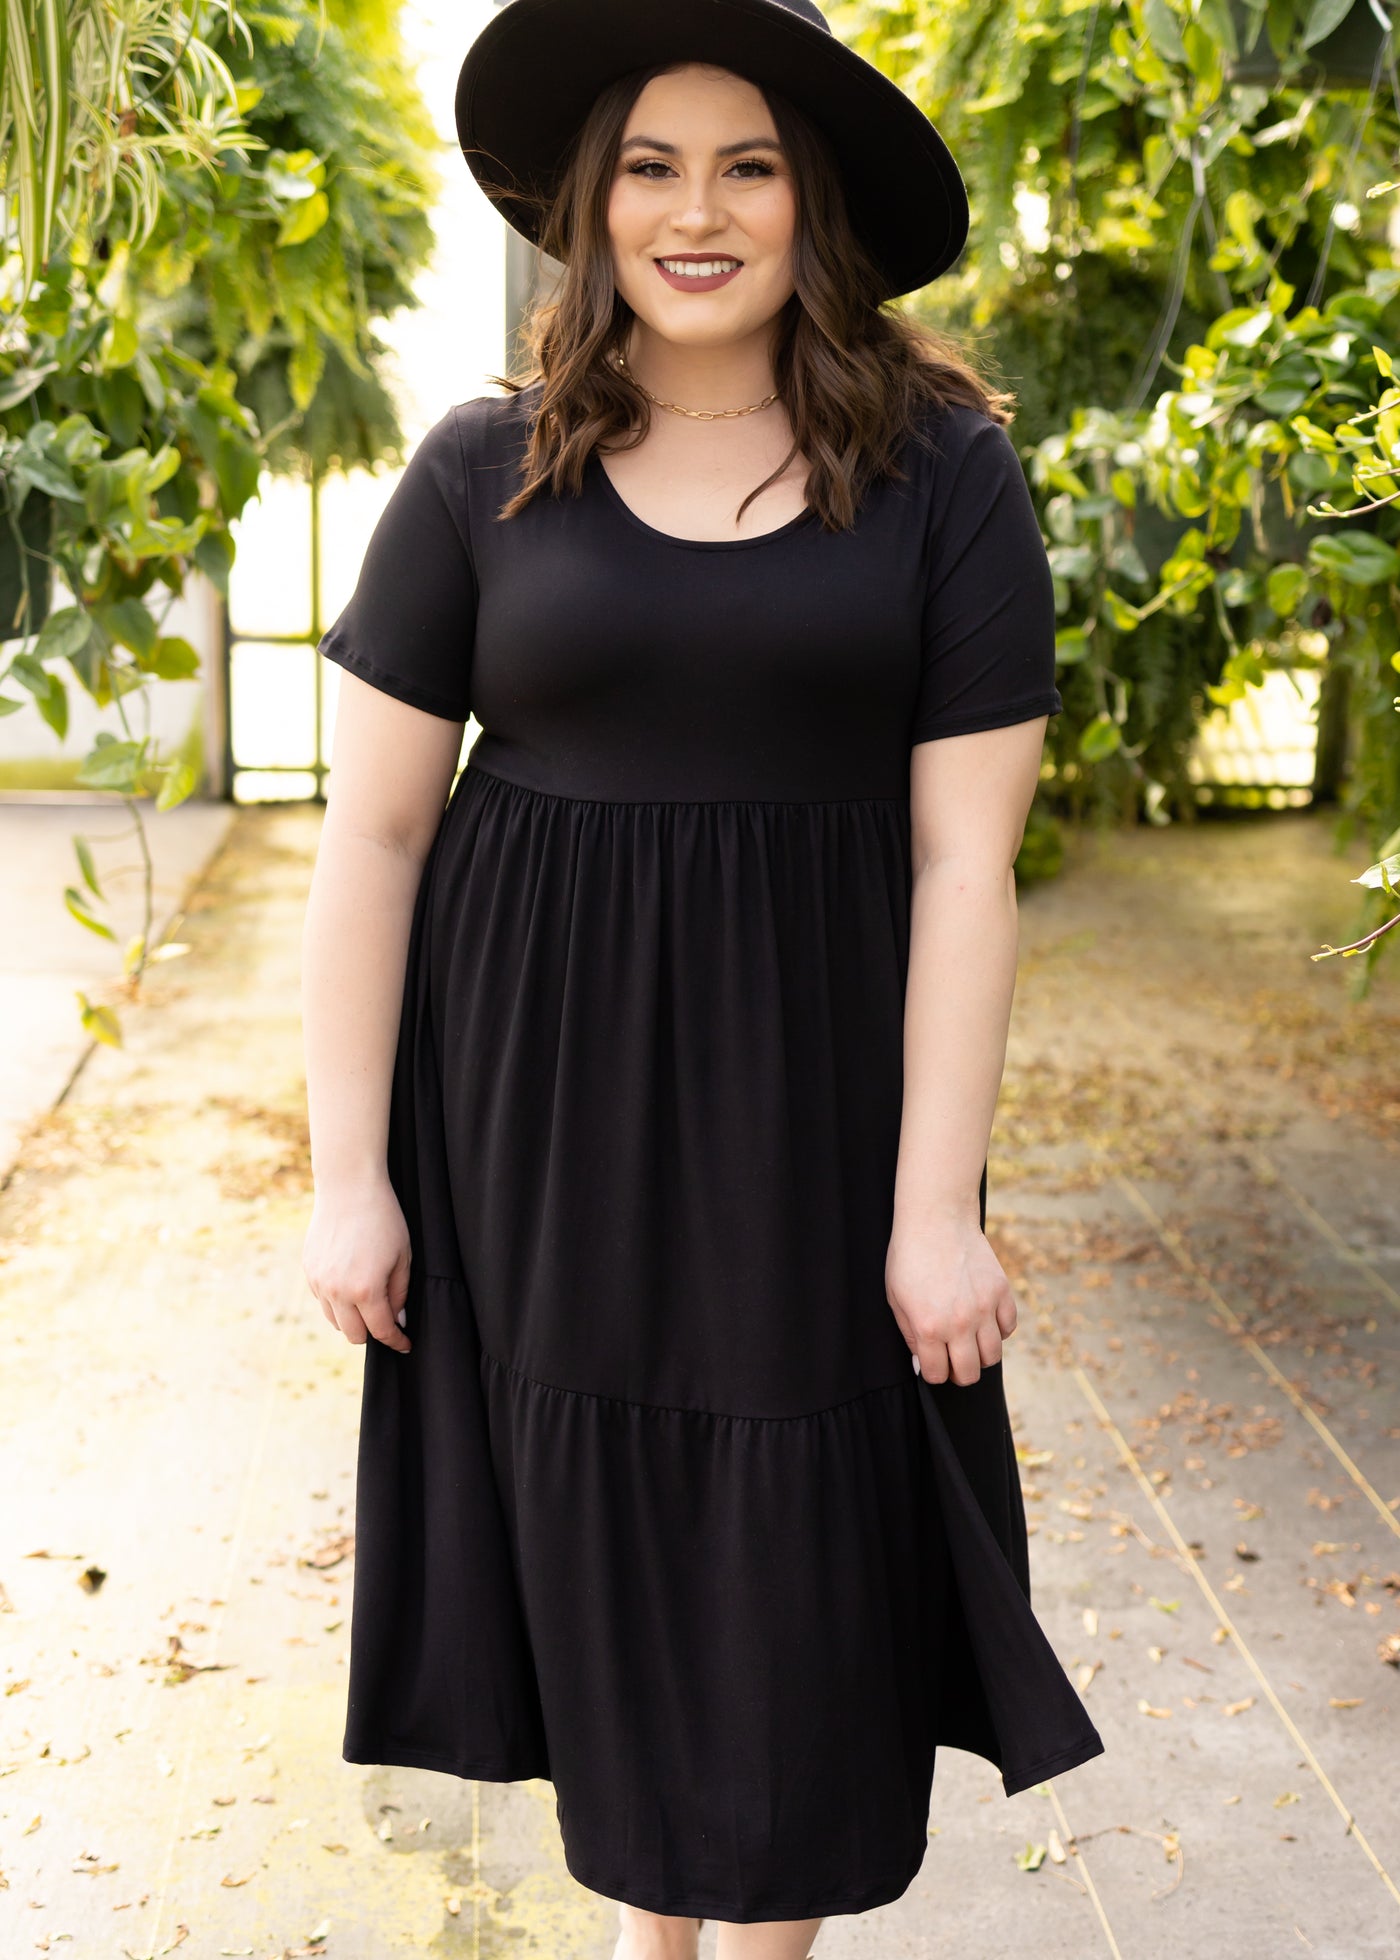 Short sleeve plus size black dress